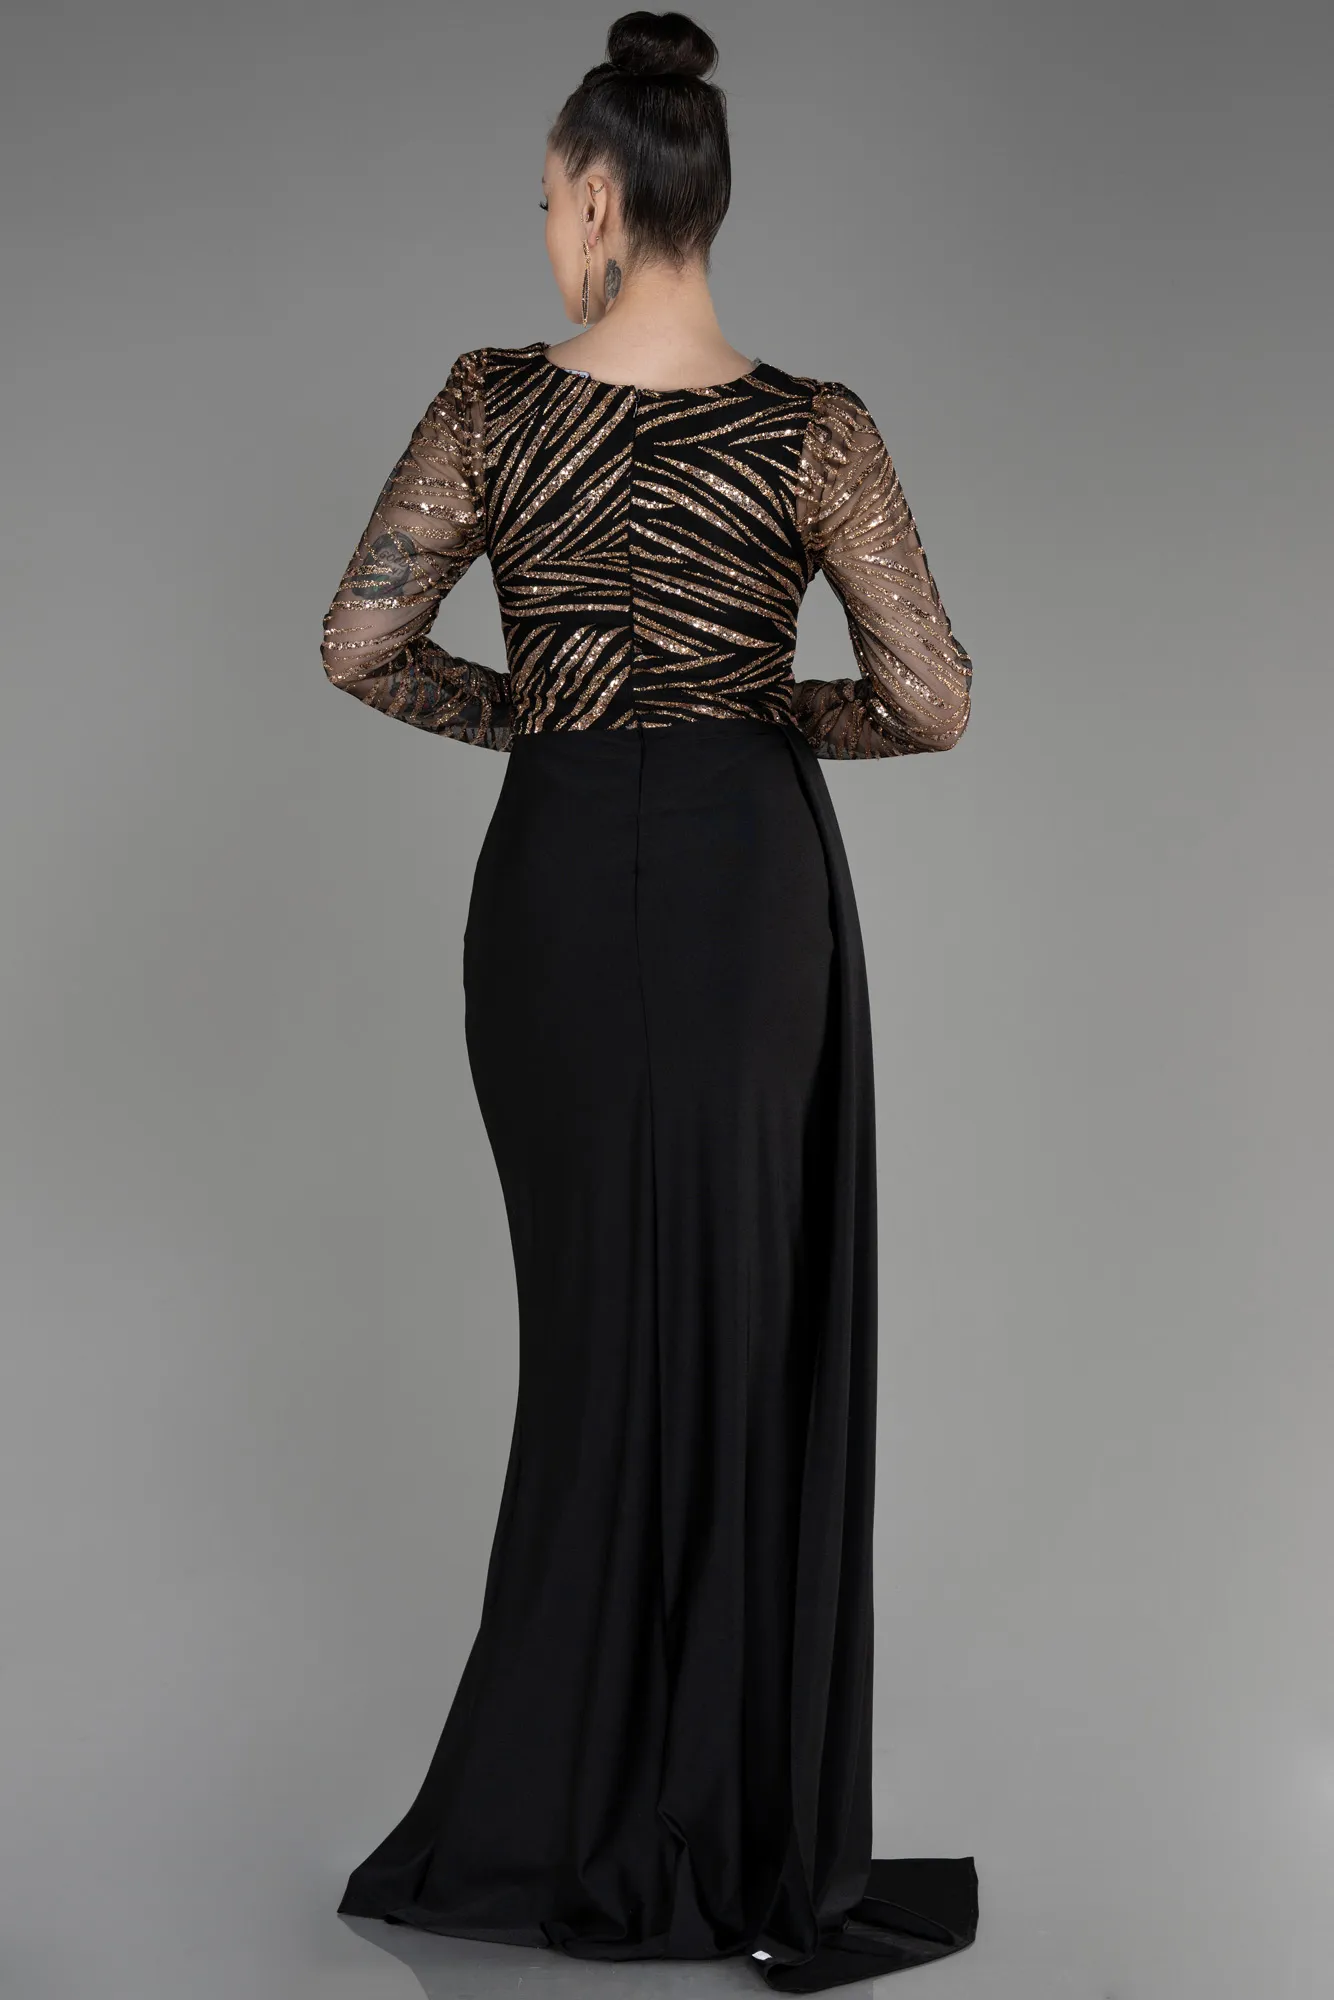 Black-Gold-Long Sleeve Evening Dress ABU3834